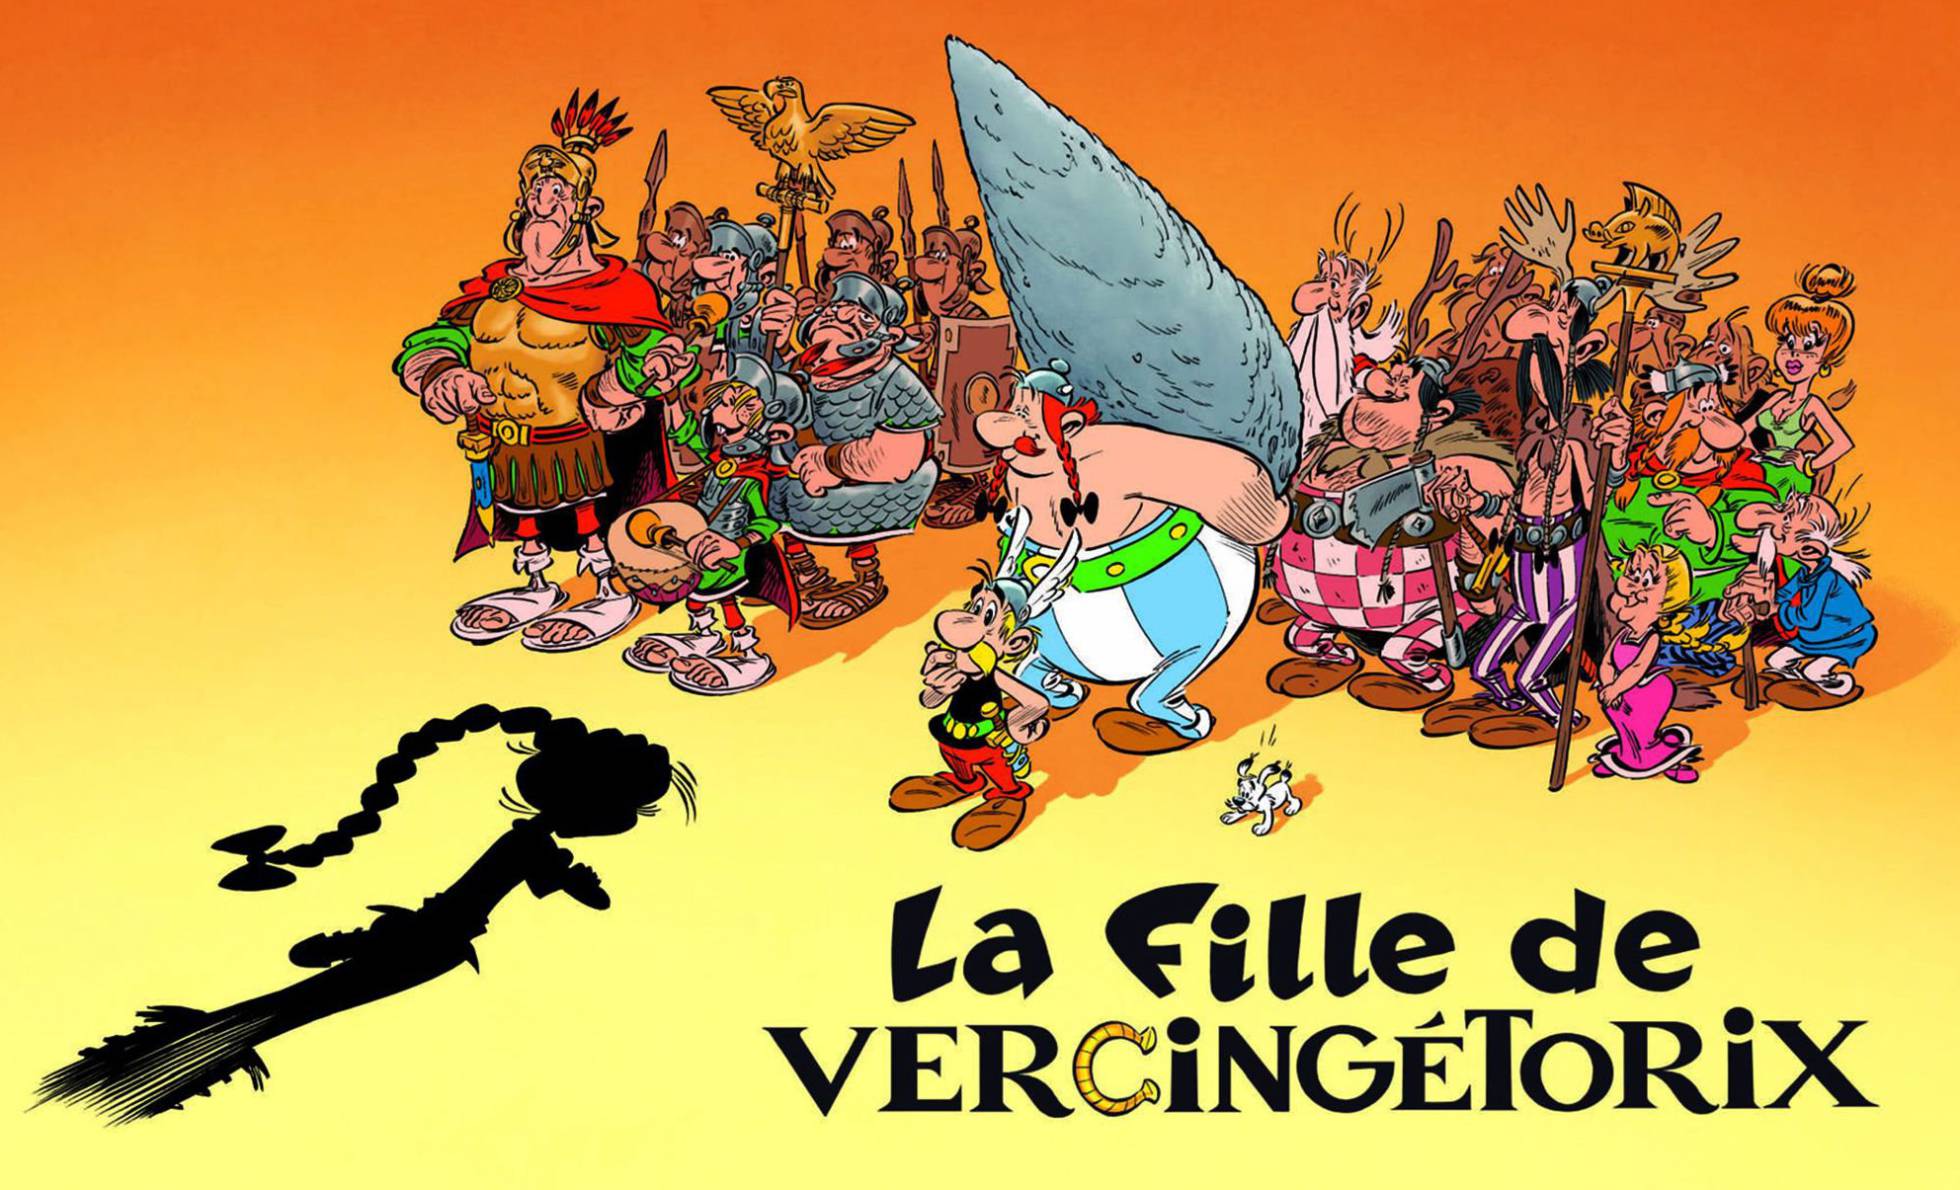 Risultati immagini per asterix biblioteca nazionale parigi immagini